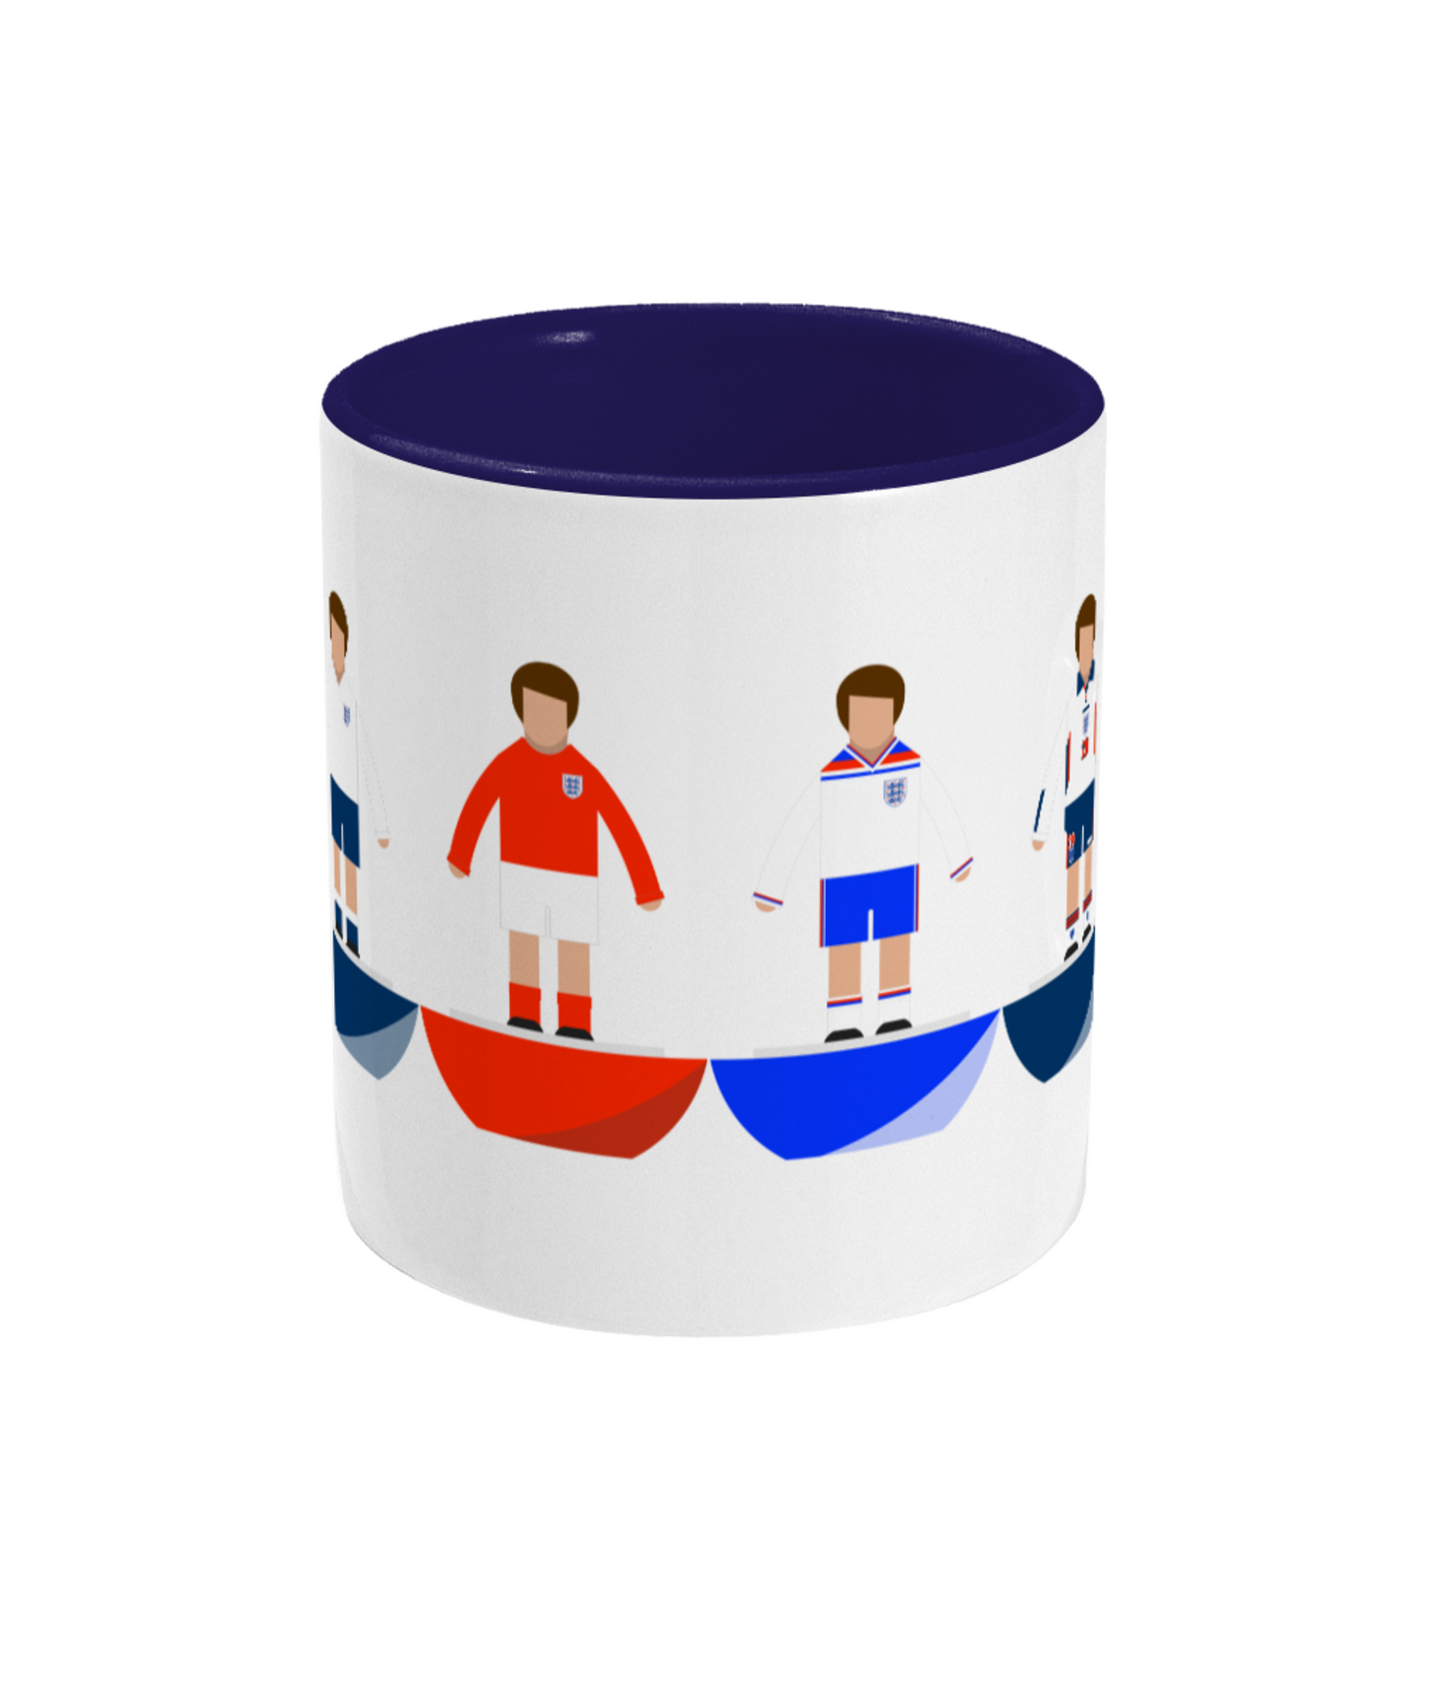 Football Kits 'England combined' Mug